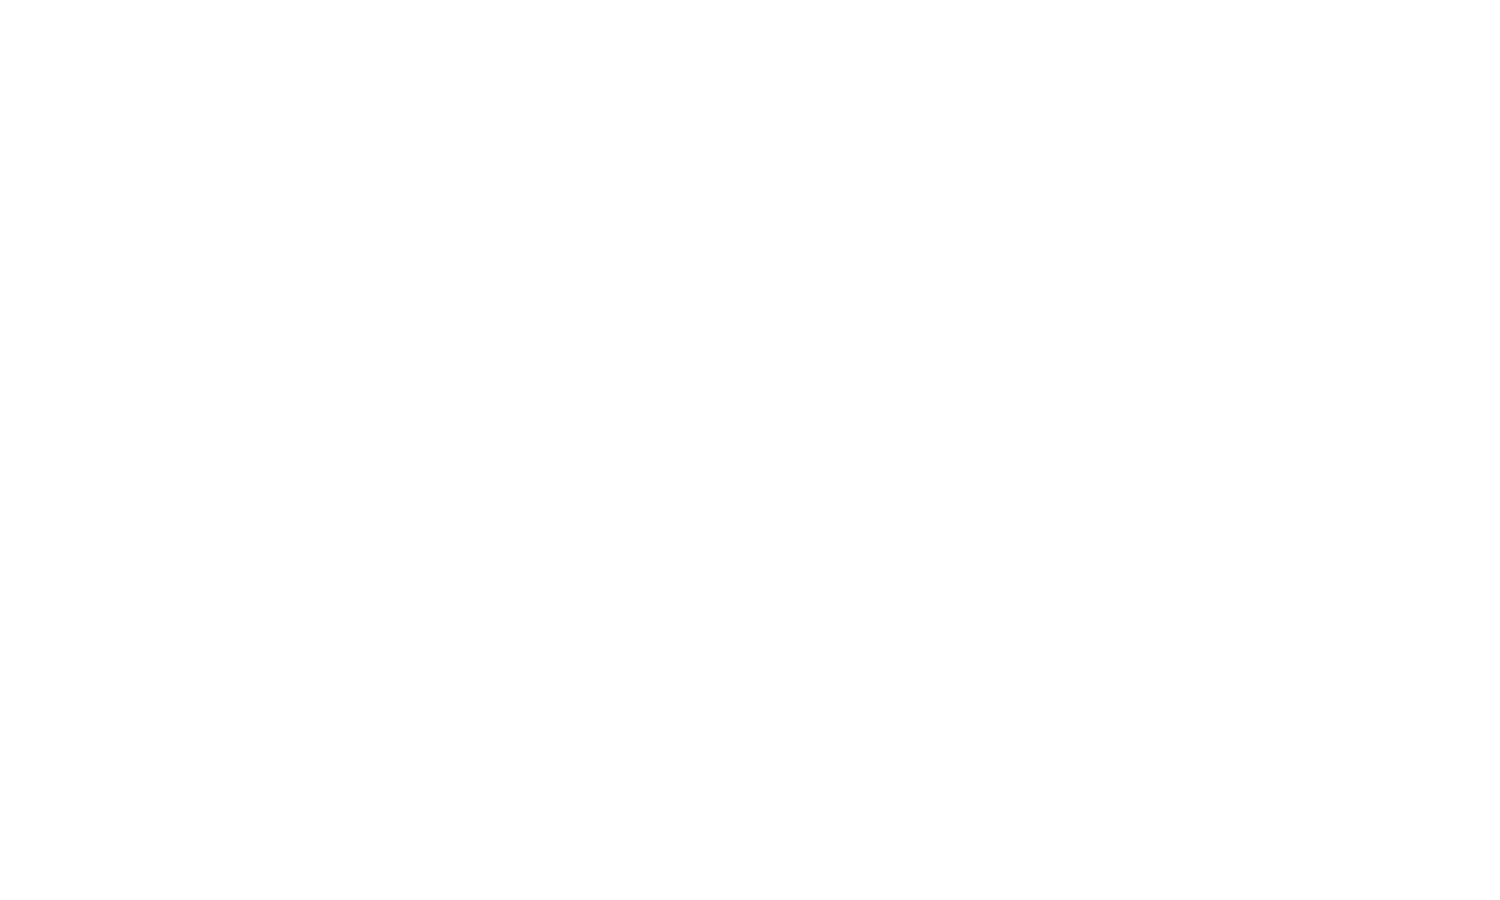 Celeste Kellogg